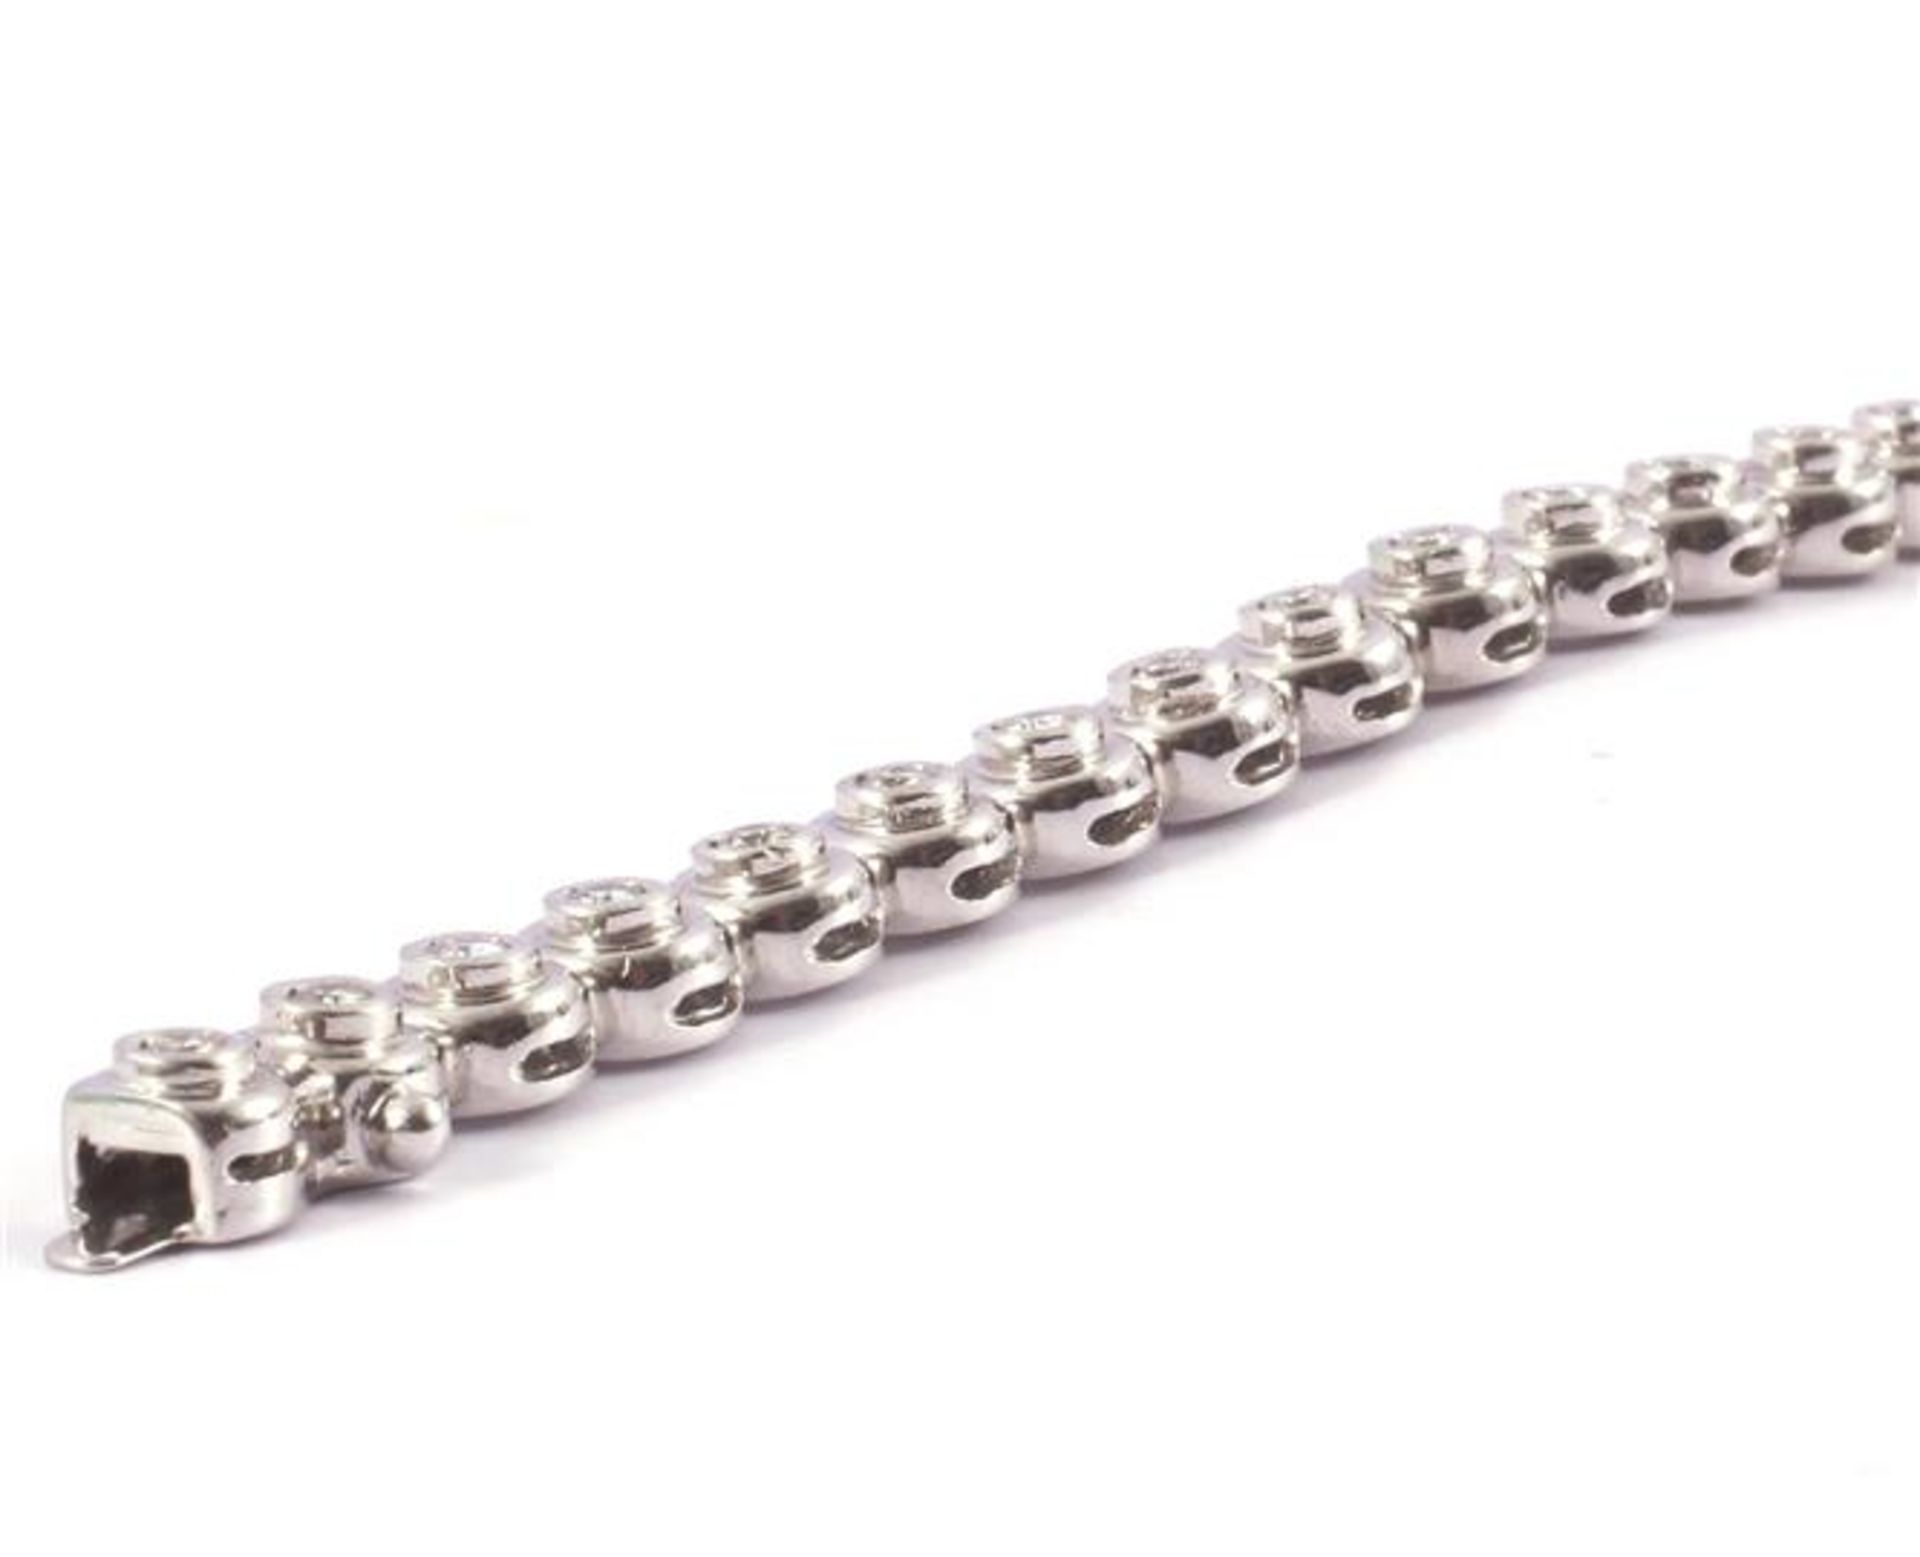 White gold bracelet, 18 kt, set with brilliant cut diamond, approx. 1.00 ct, 18 cm long - Image 2 of 2